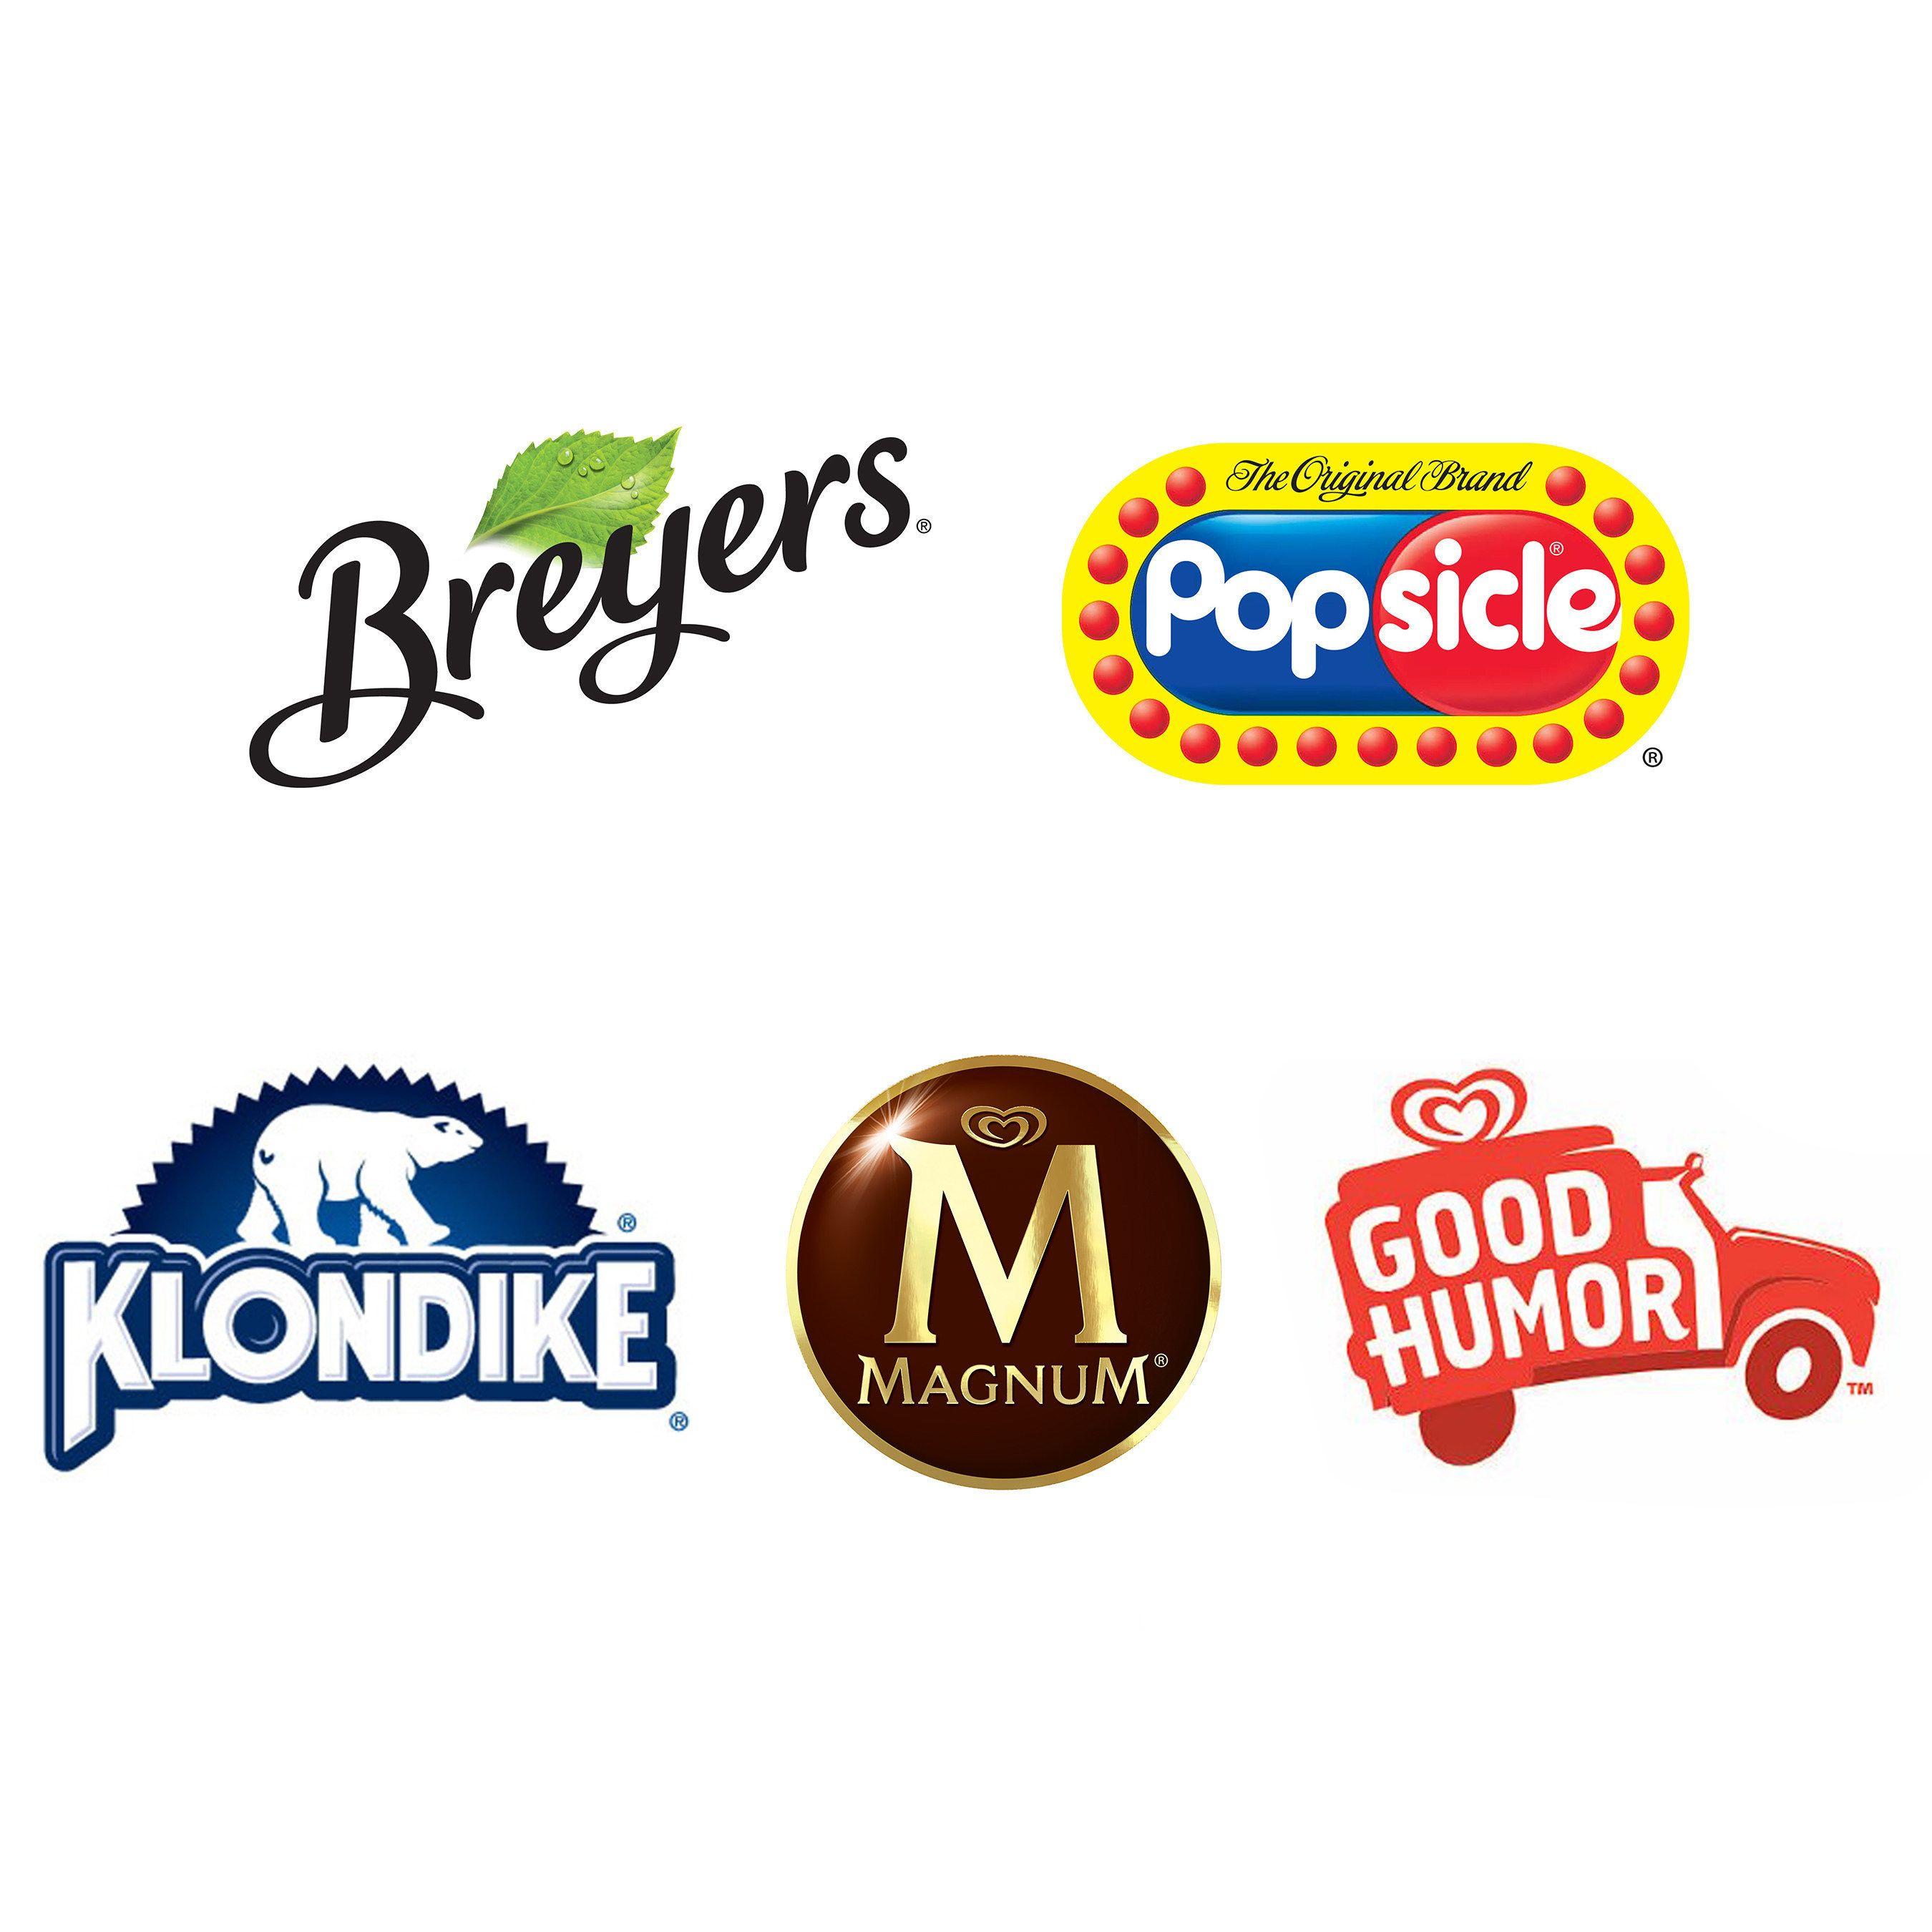 Ice Cream Brand Logo - Get the Scoop! Unilever Ice Cream Introduces New Frozen Treats